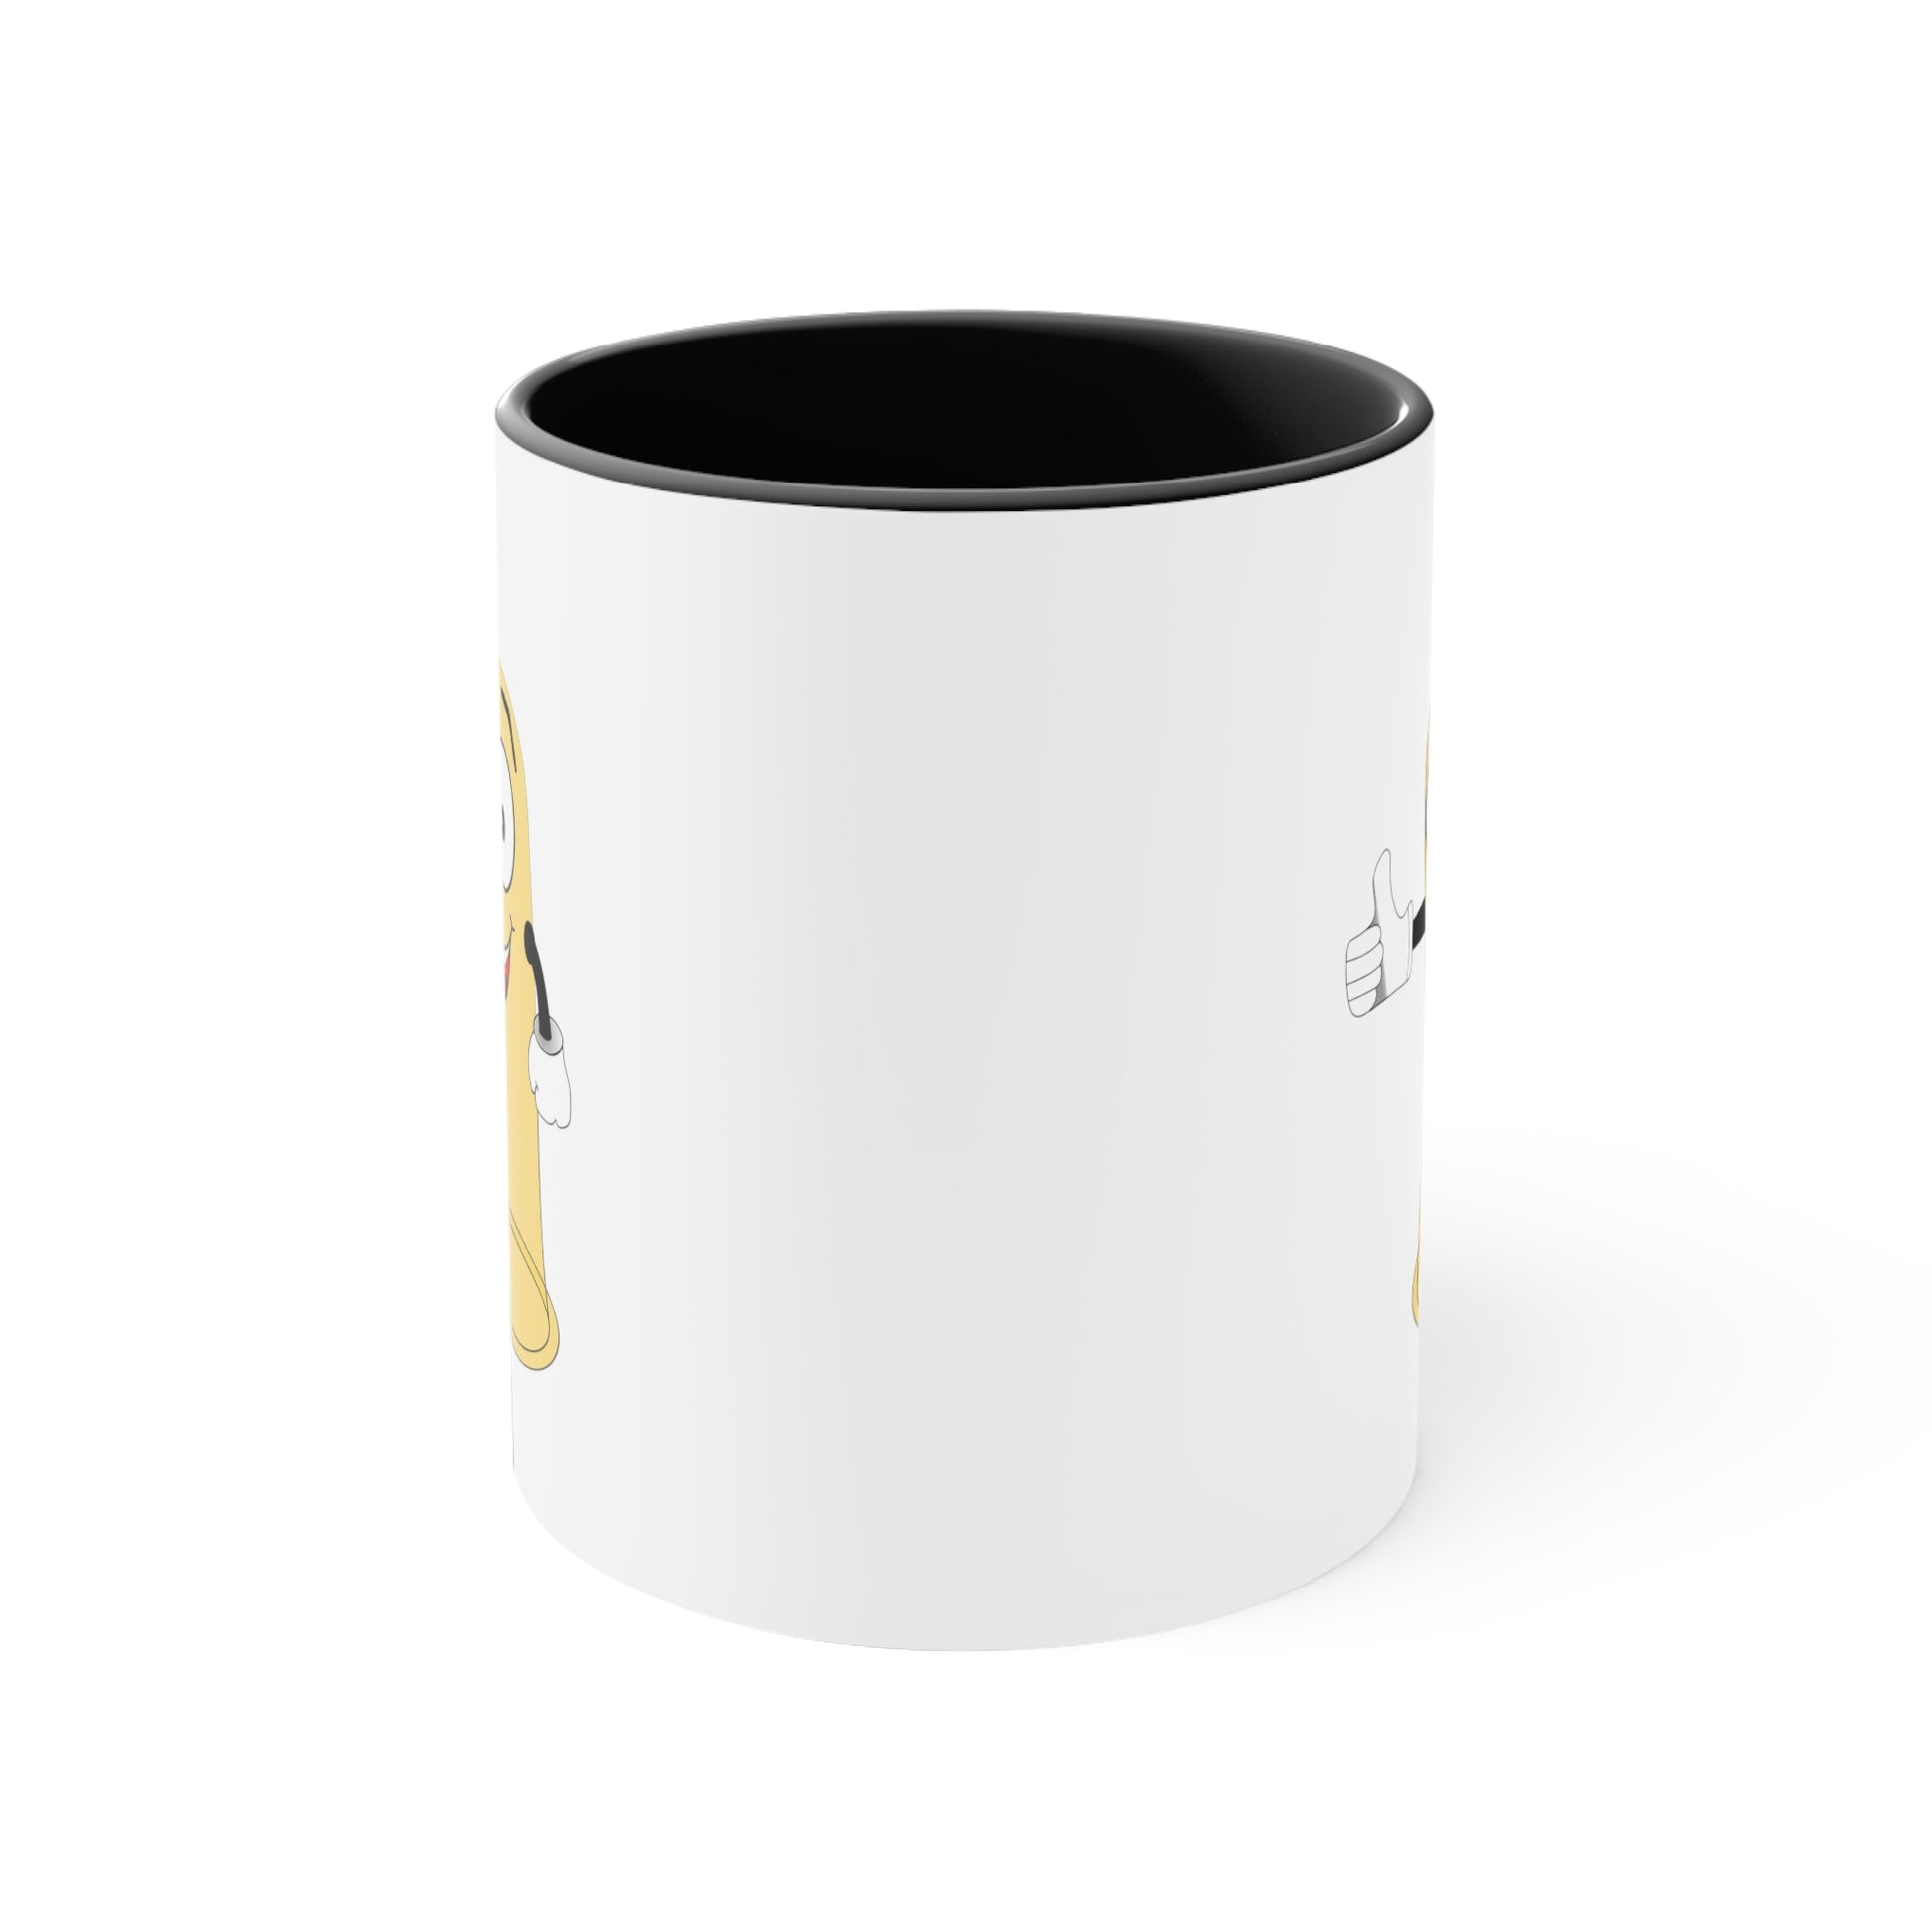 Condom Man Coffee Mug - Double Sided Black Accent White Ceramic 11oz by TheGlassyLass